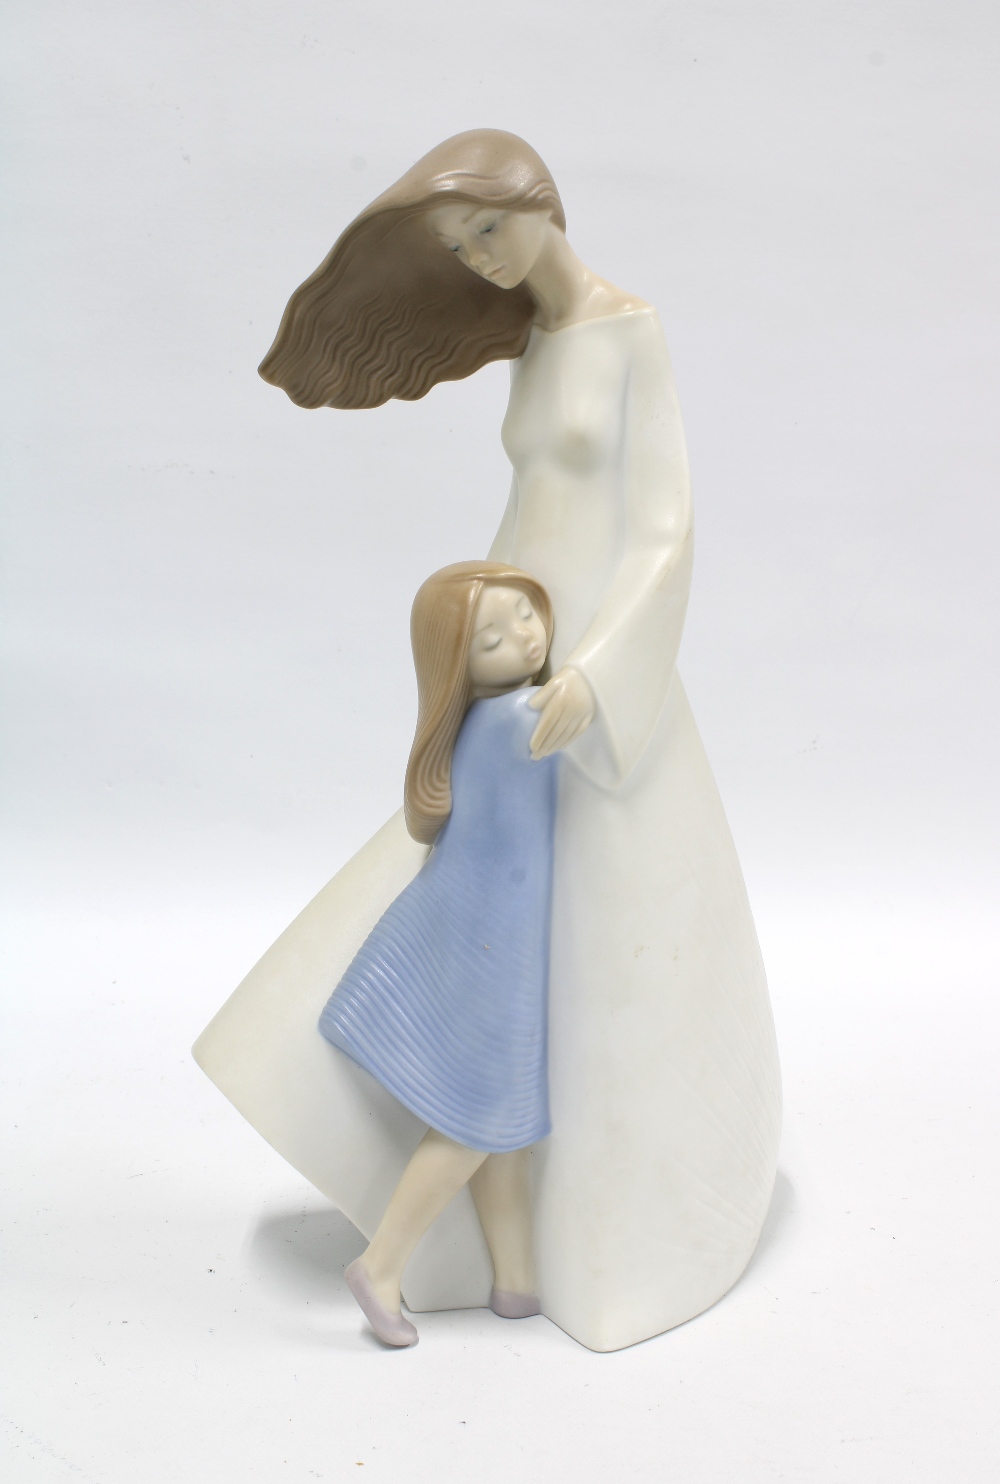 Boxed Lladro figure 'I love you, mom', missing original matching candle 31cm - Bild 2 aus 4